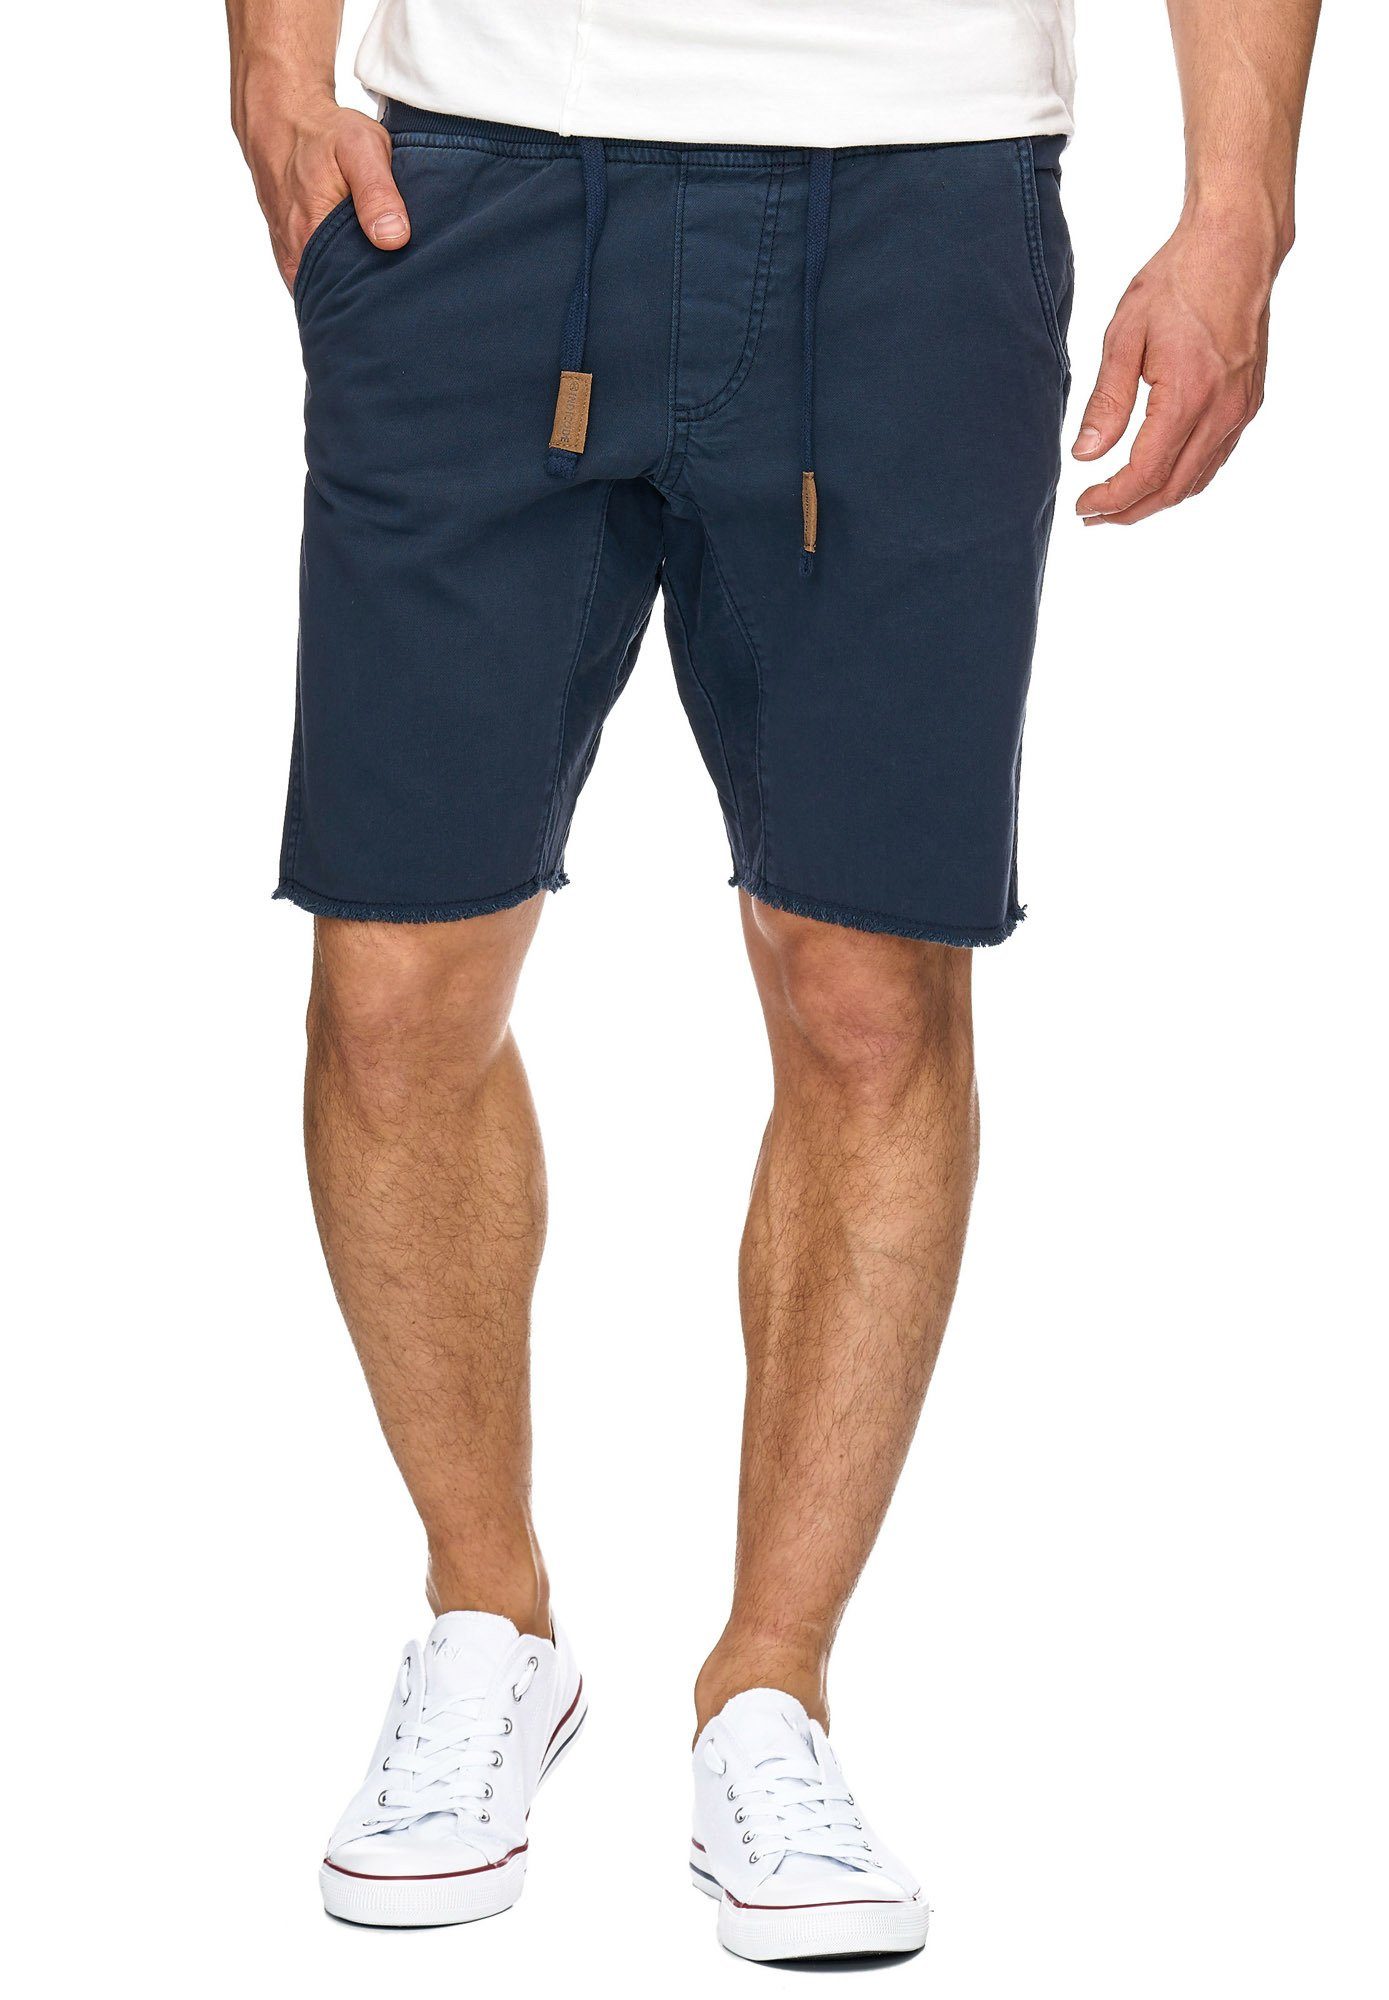 Lange Herrenshorts online kaufen » Herren Long Shorts | OTTO | Shorts